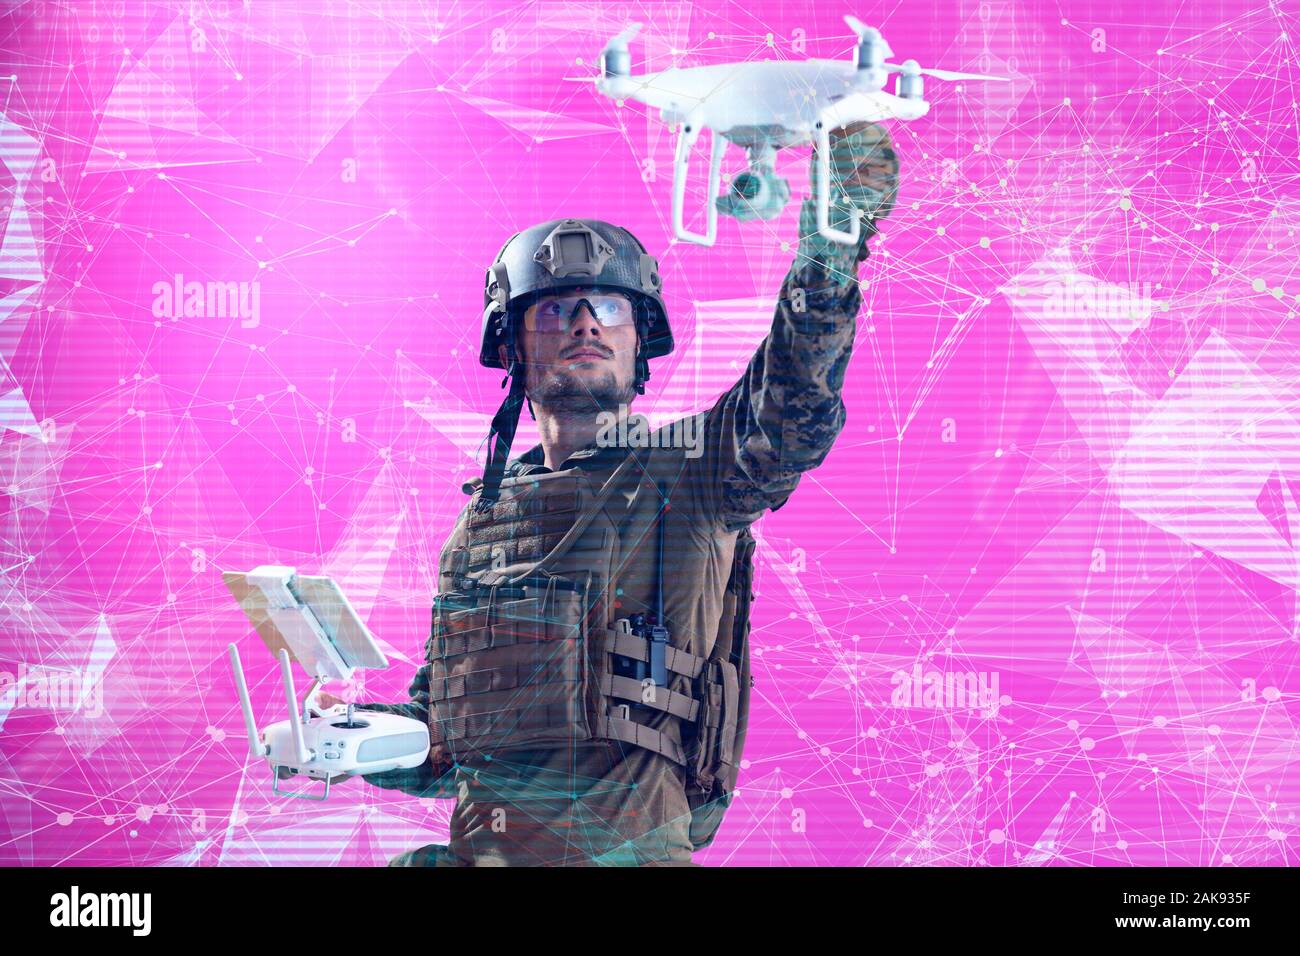 modern warfare soldier as drone control technician WITH GLITCH COMPUTER ERROR EFFECT Stock Photo